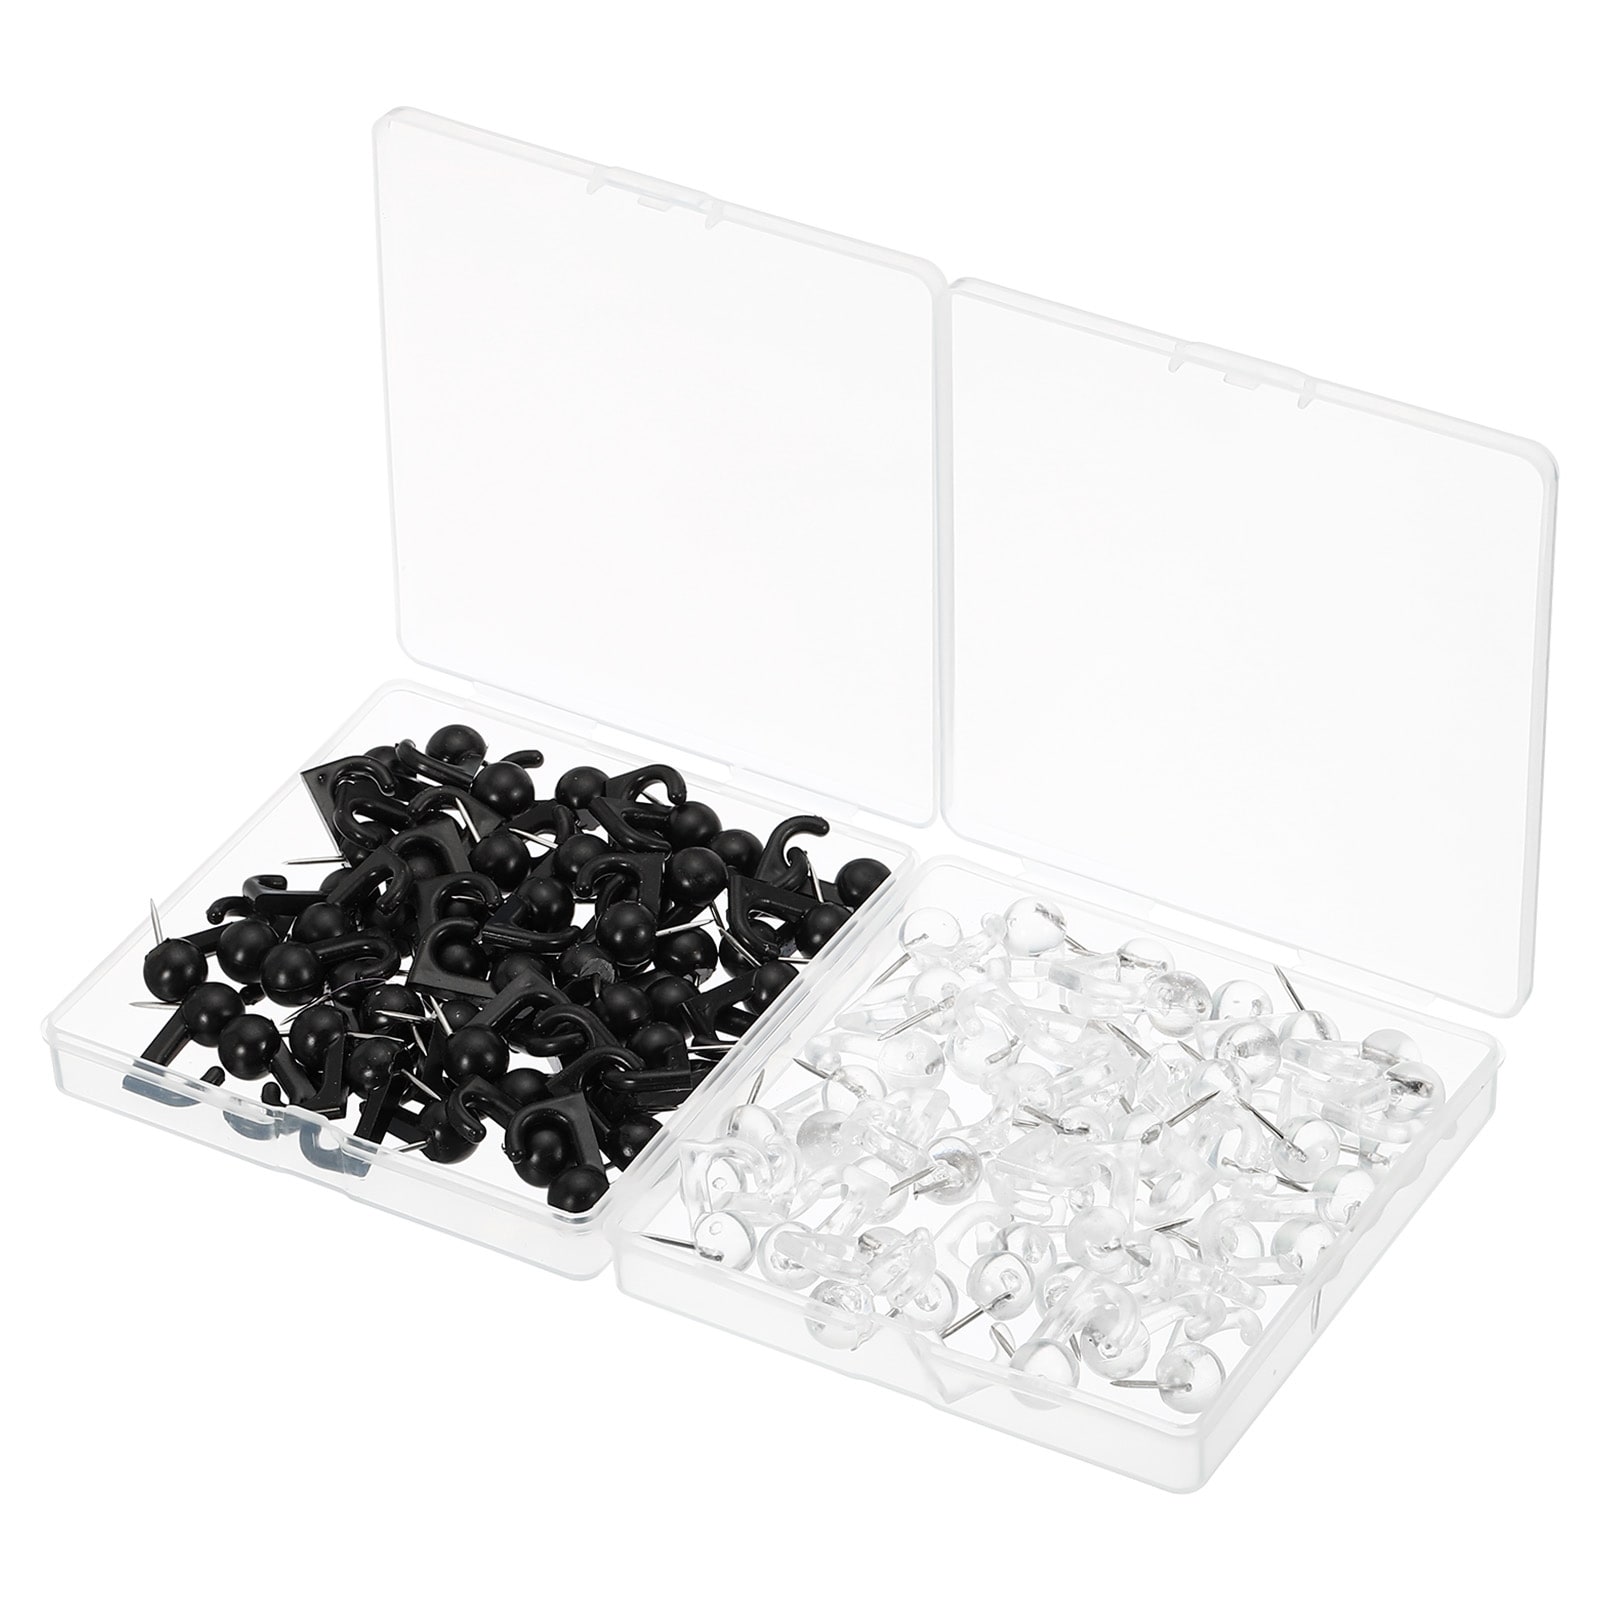 100pcs Push Pin Hooks Plastic Head Wall Thumb Tacks Hanging Nails, Clear, Black - Clear, Black